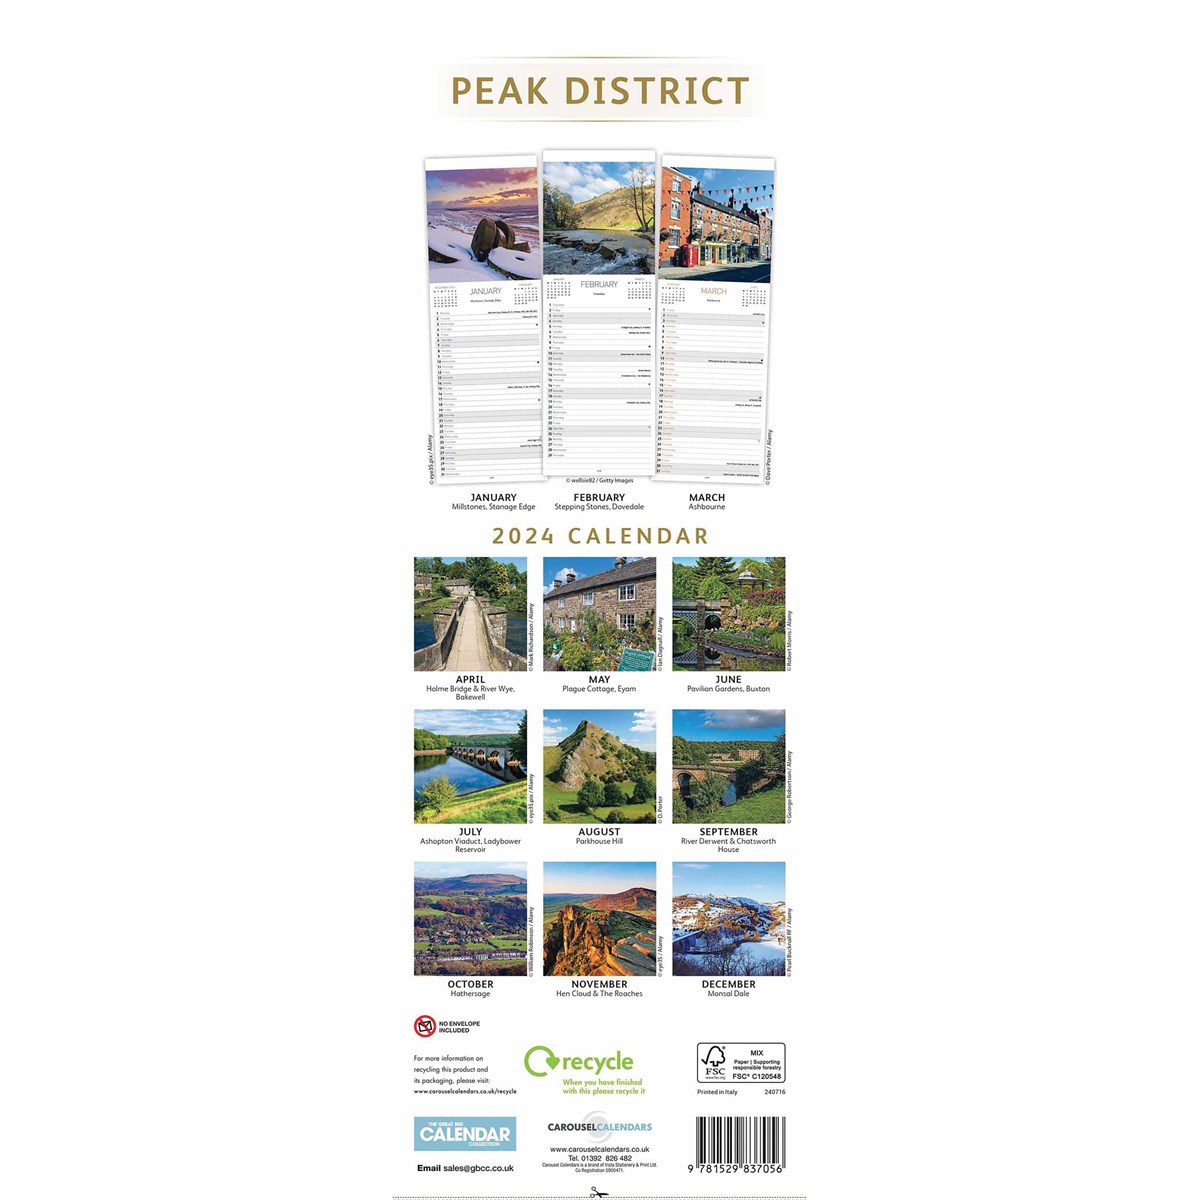 Peak District Slim Calendar 2024 by Carousel Calendars 240716